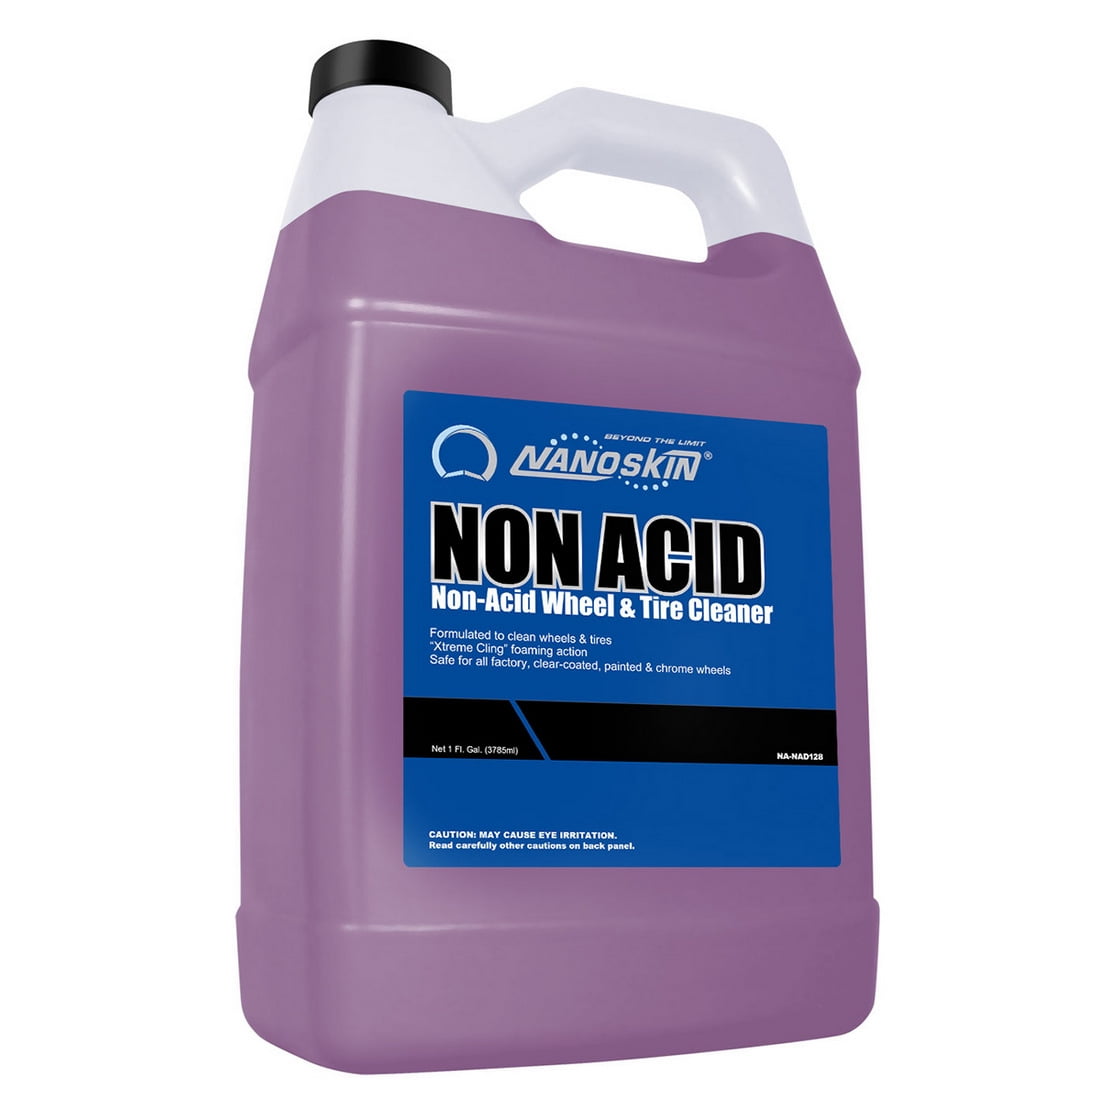 NON ACID Non-Acid Wheel & Tire Cleaner 4:1 – NANOSKIN Car Care Products